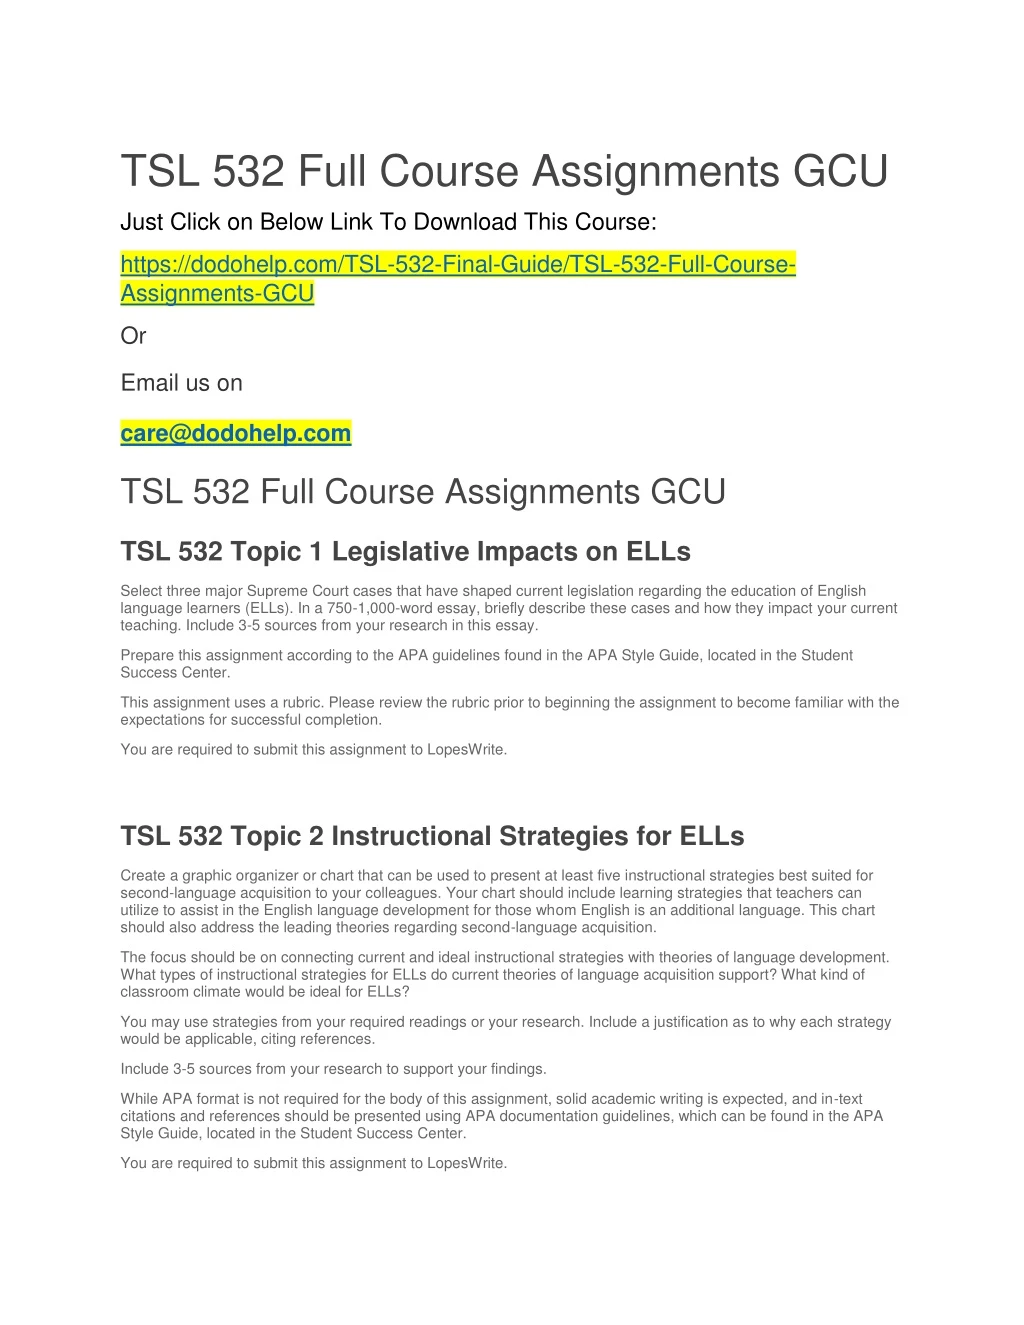 tsl 532 full course assignments gcu